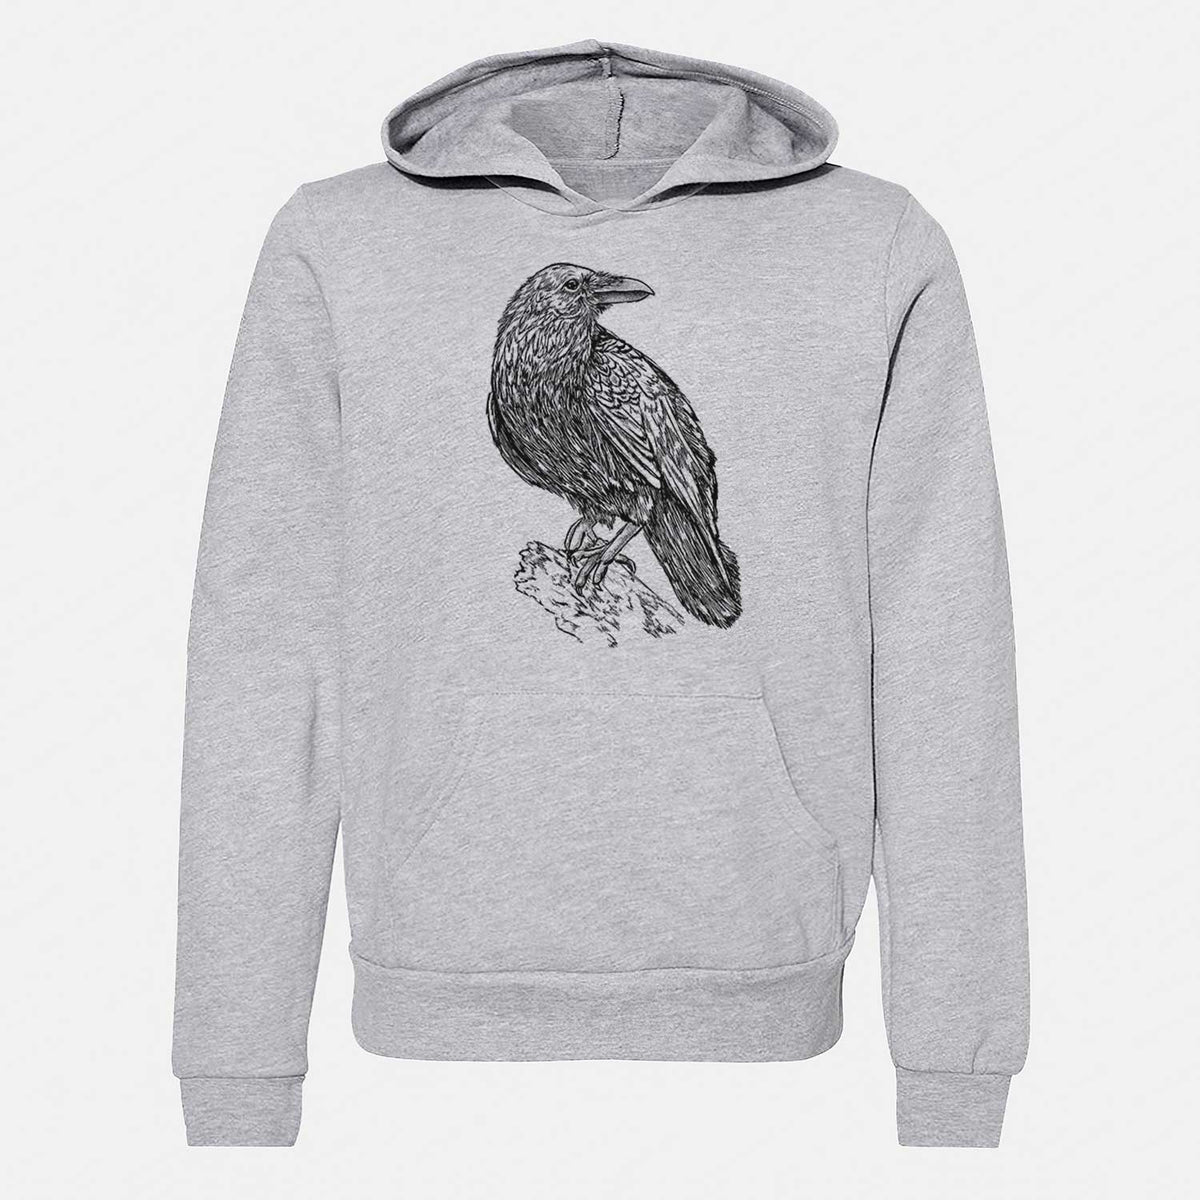 Corvus corax - Common Raven - Youth Hoodie Sweatshirt